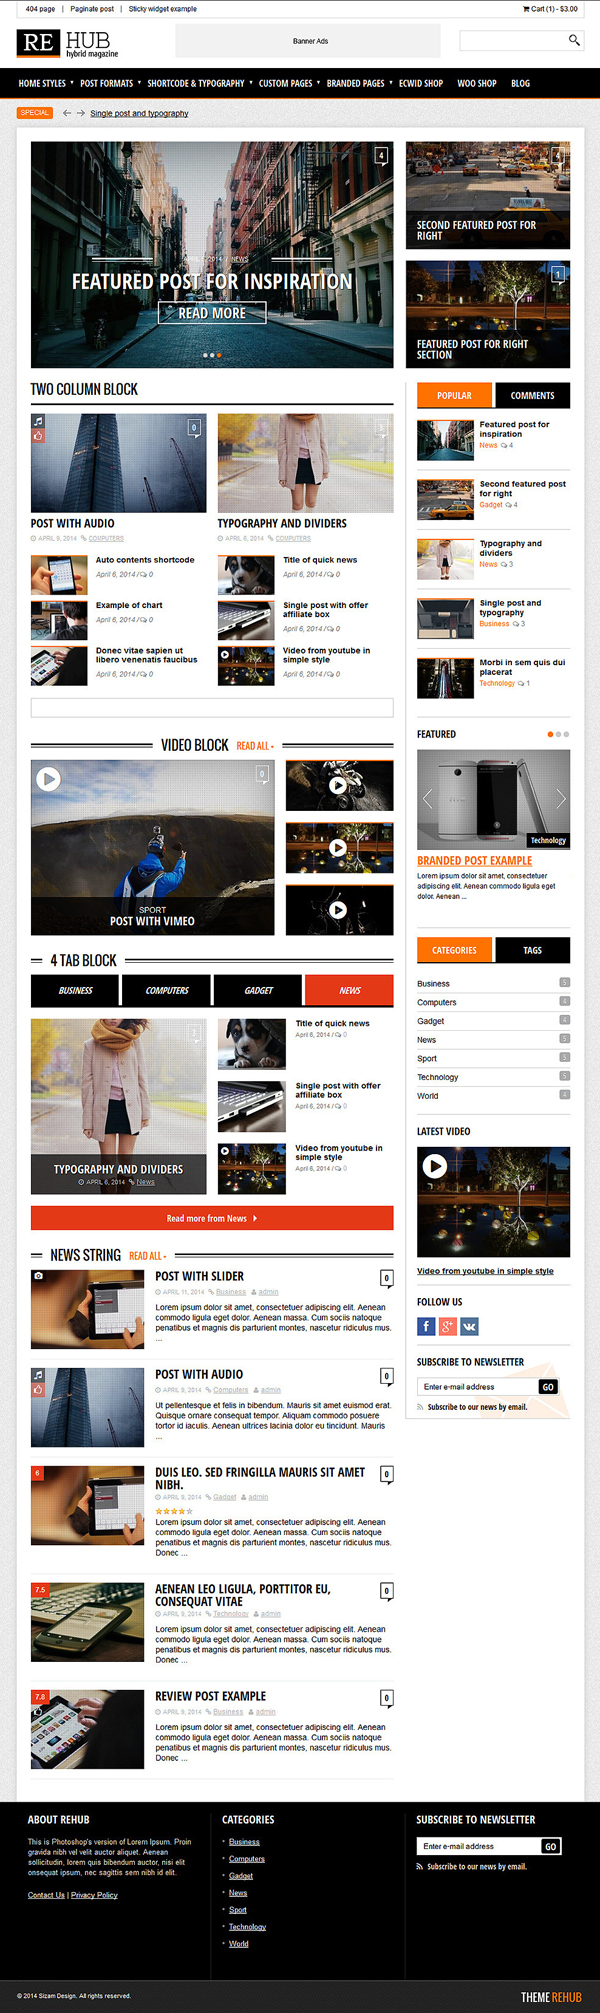 REHub - Hybrid News, Shop, Review, Affiliate WordPress Theme